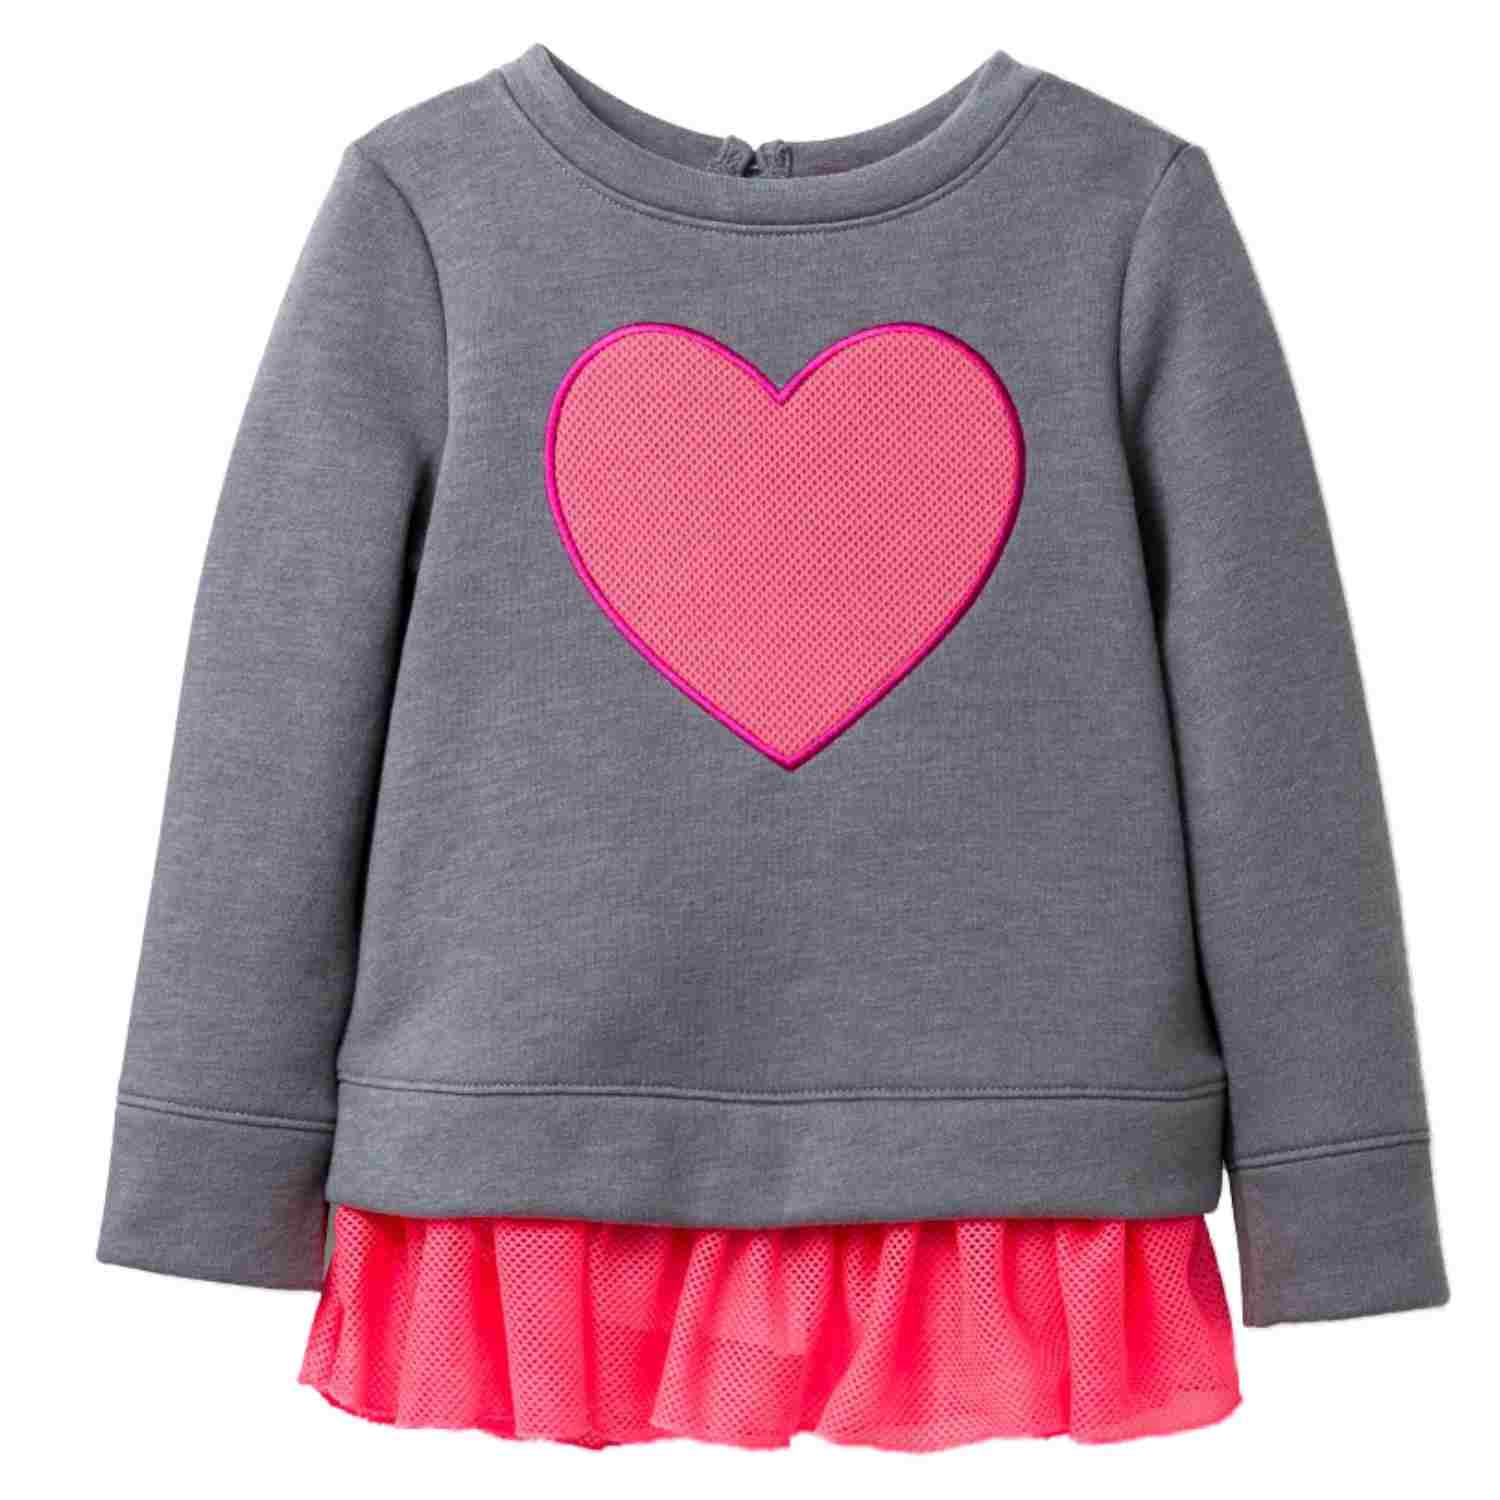 Girl's Size 18 Months Cat & Jack Pink/Gray Heart Ruffle Sweatshirt Nwt #12732